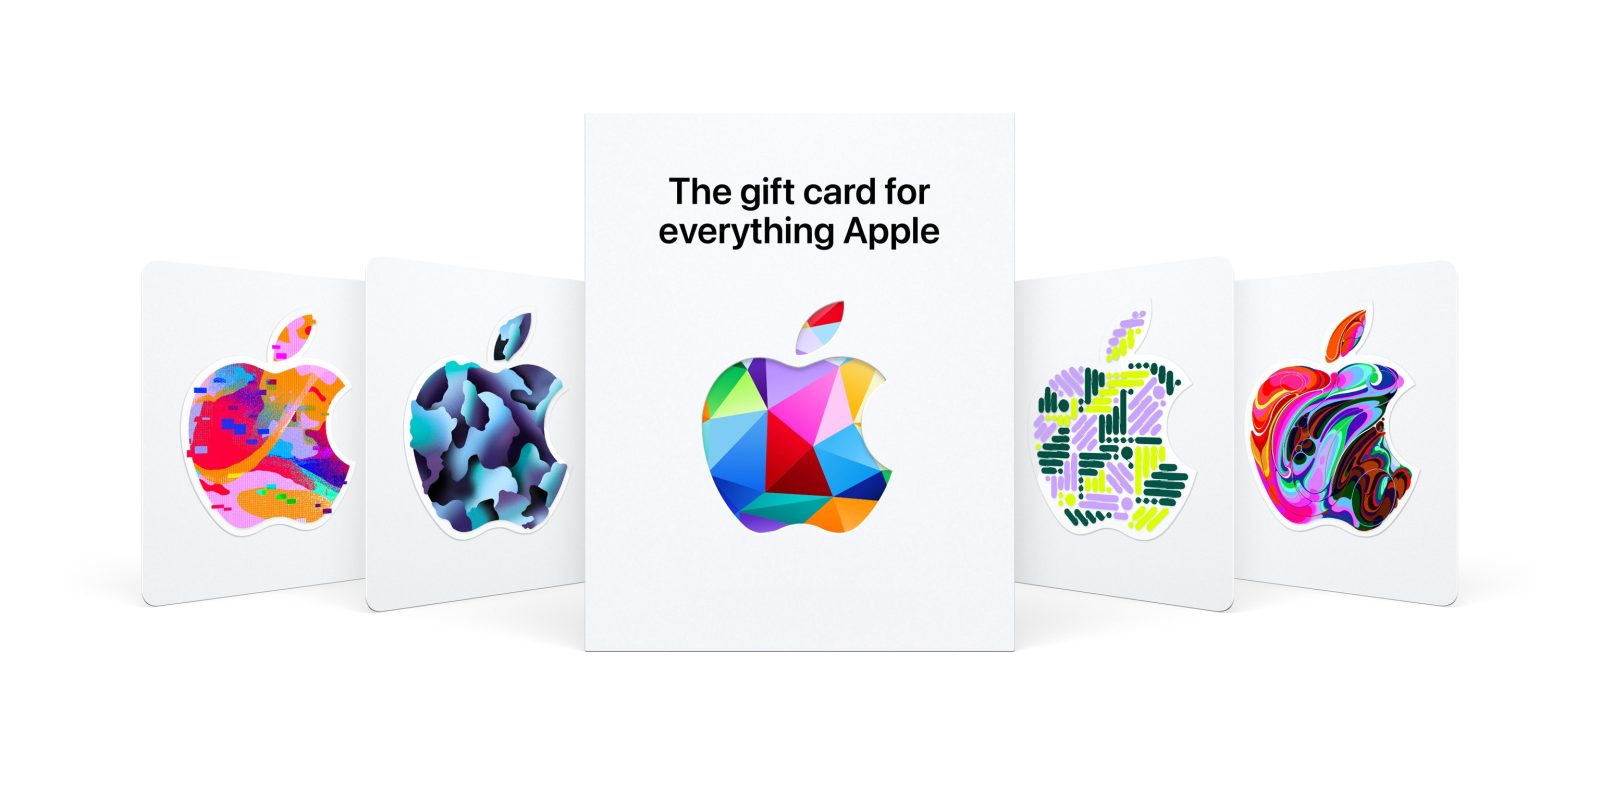 apple-gift-card-uk.jpg?quality=82&strip=all&w=1600